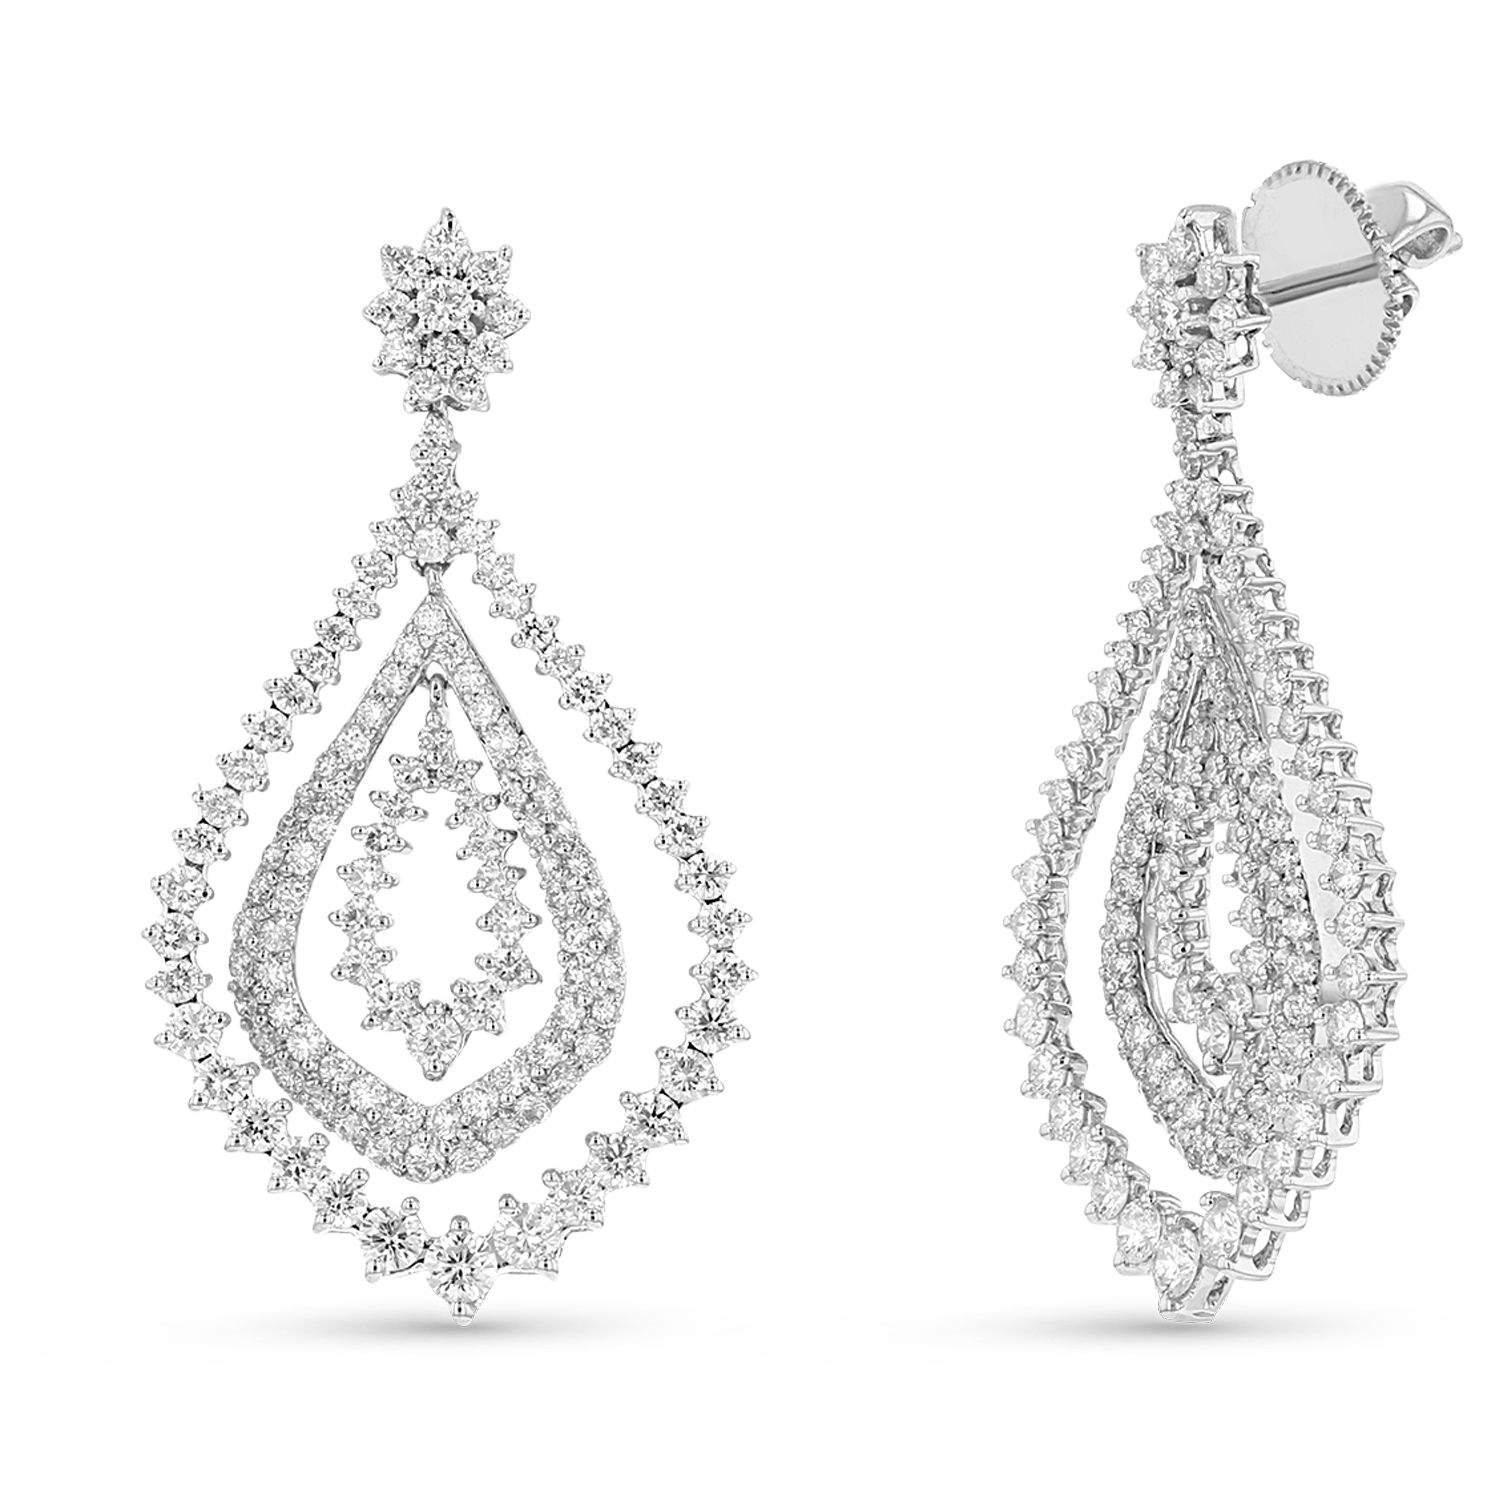 View 2.55ctw Diamond Fashion Earrings in 18k White Gold